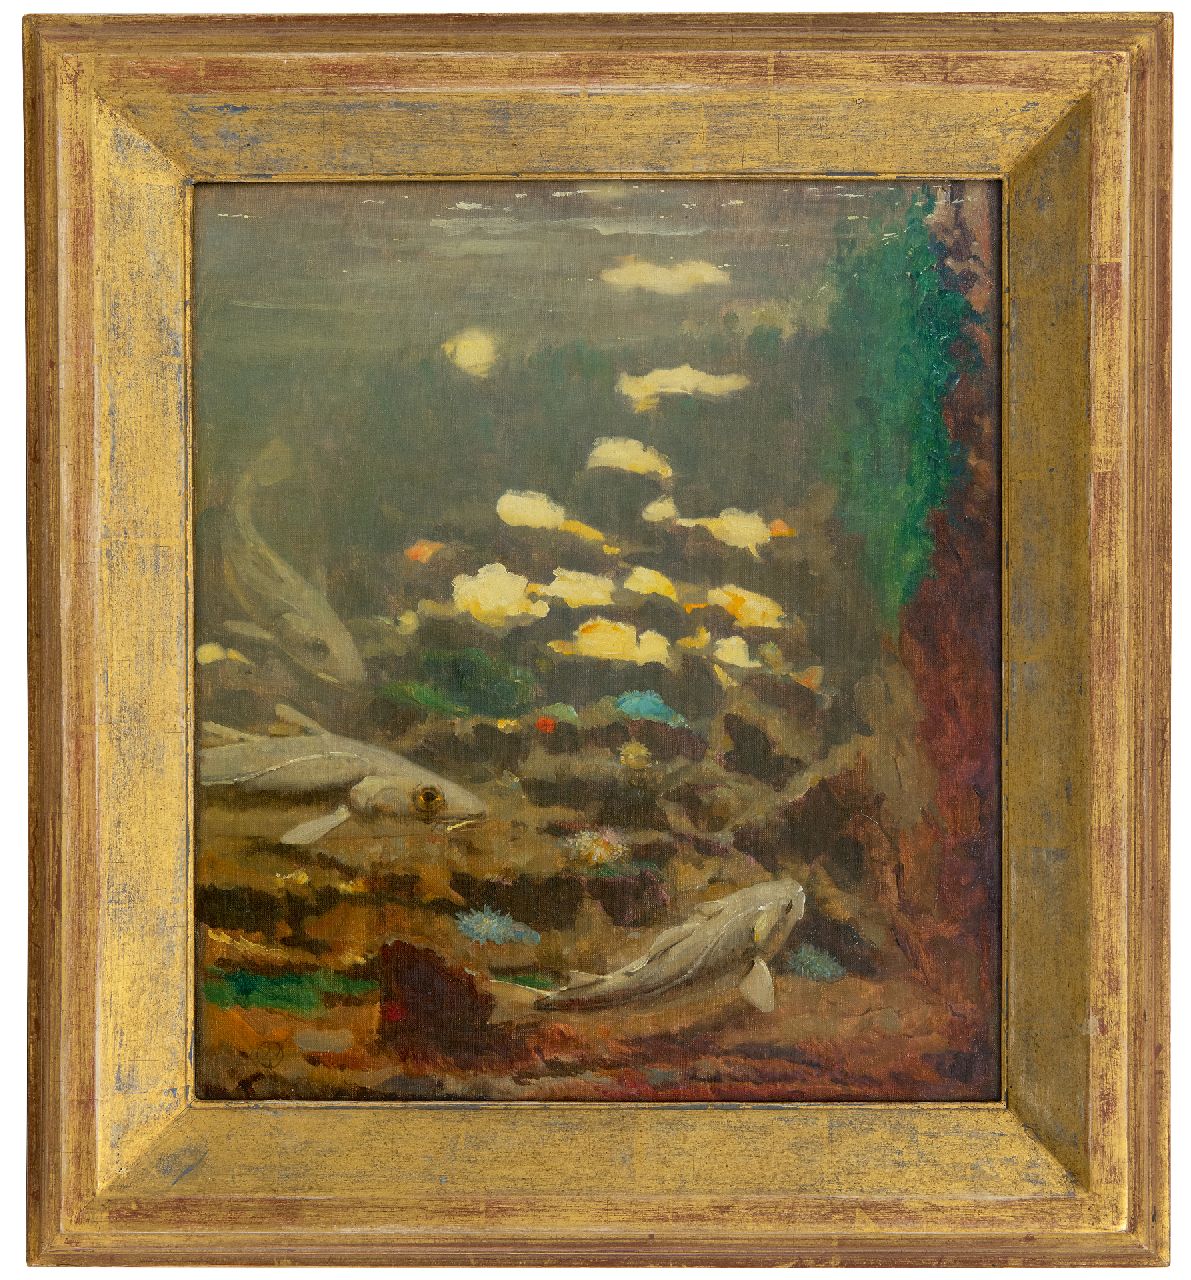 Dijsselhof G.W.  | Gerrit Willem Dijsselhof | Paintings offered for sale | Carps and anemones, oil on canvas 40.3 x 35.0 cm, signed l.l. with monogram